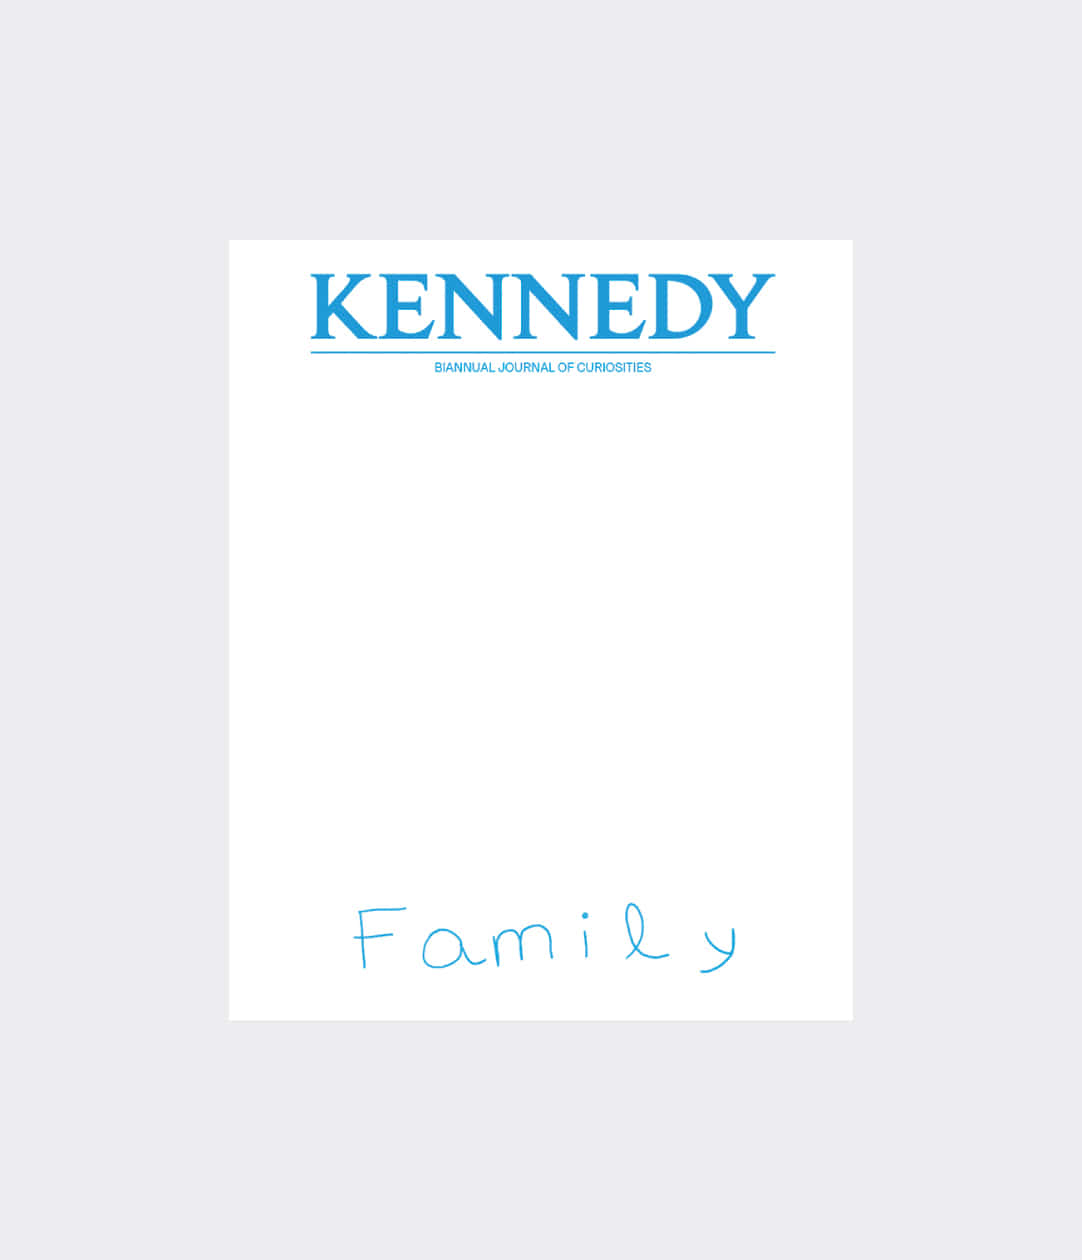 Kennedy Magazine / Issue 14, Family